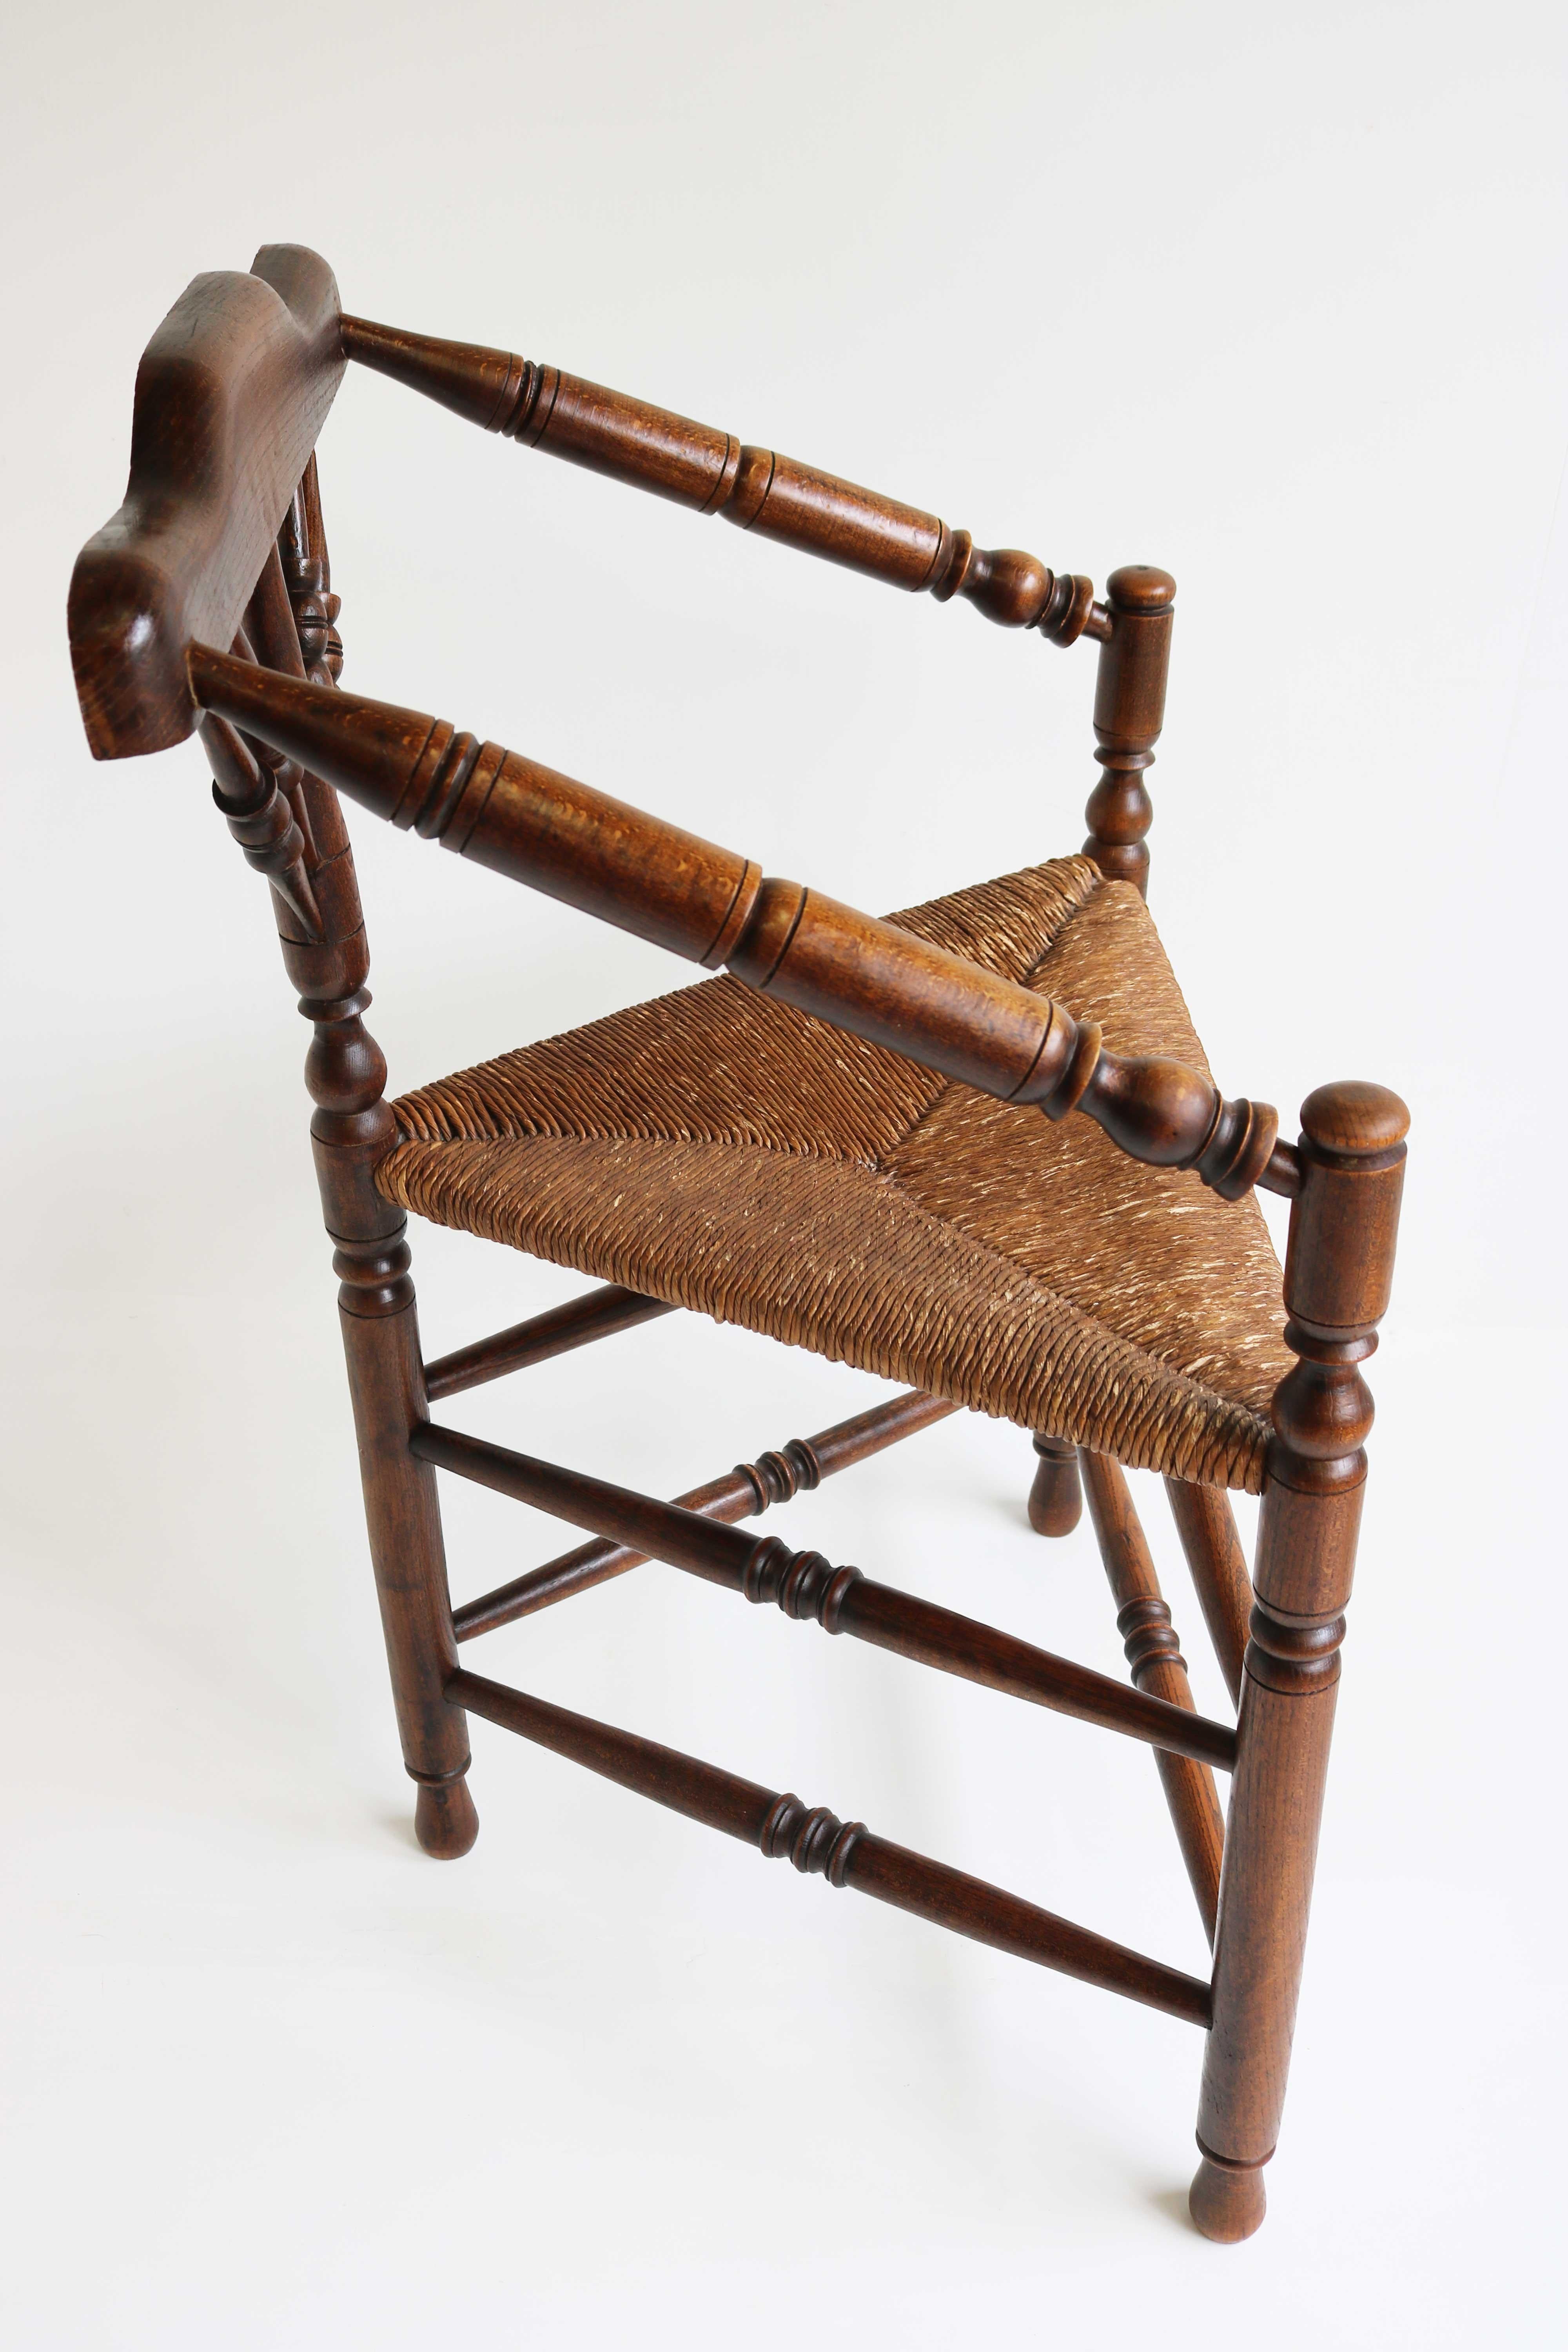 Antique Edwardian Style Triangular Corner Chair Rush Seat Knitting Armchair 1900 In Good Condition For Sale In Ijzendijke, NL